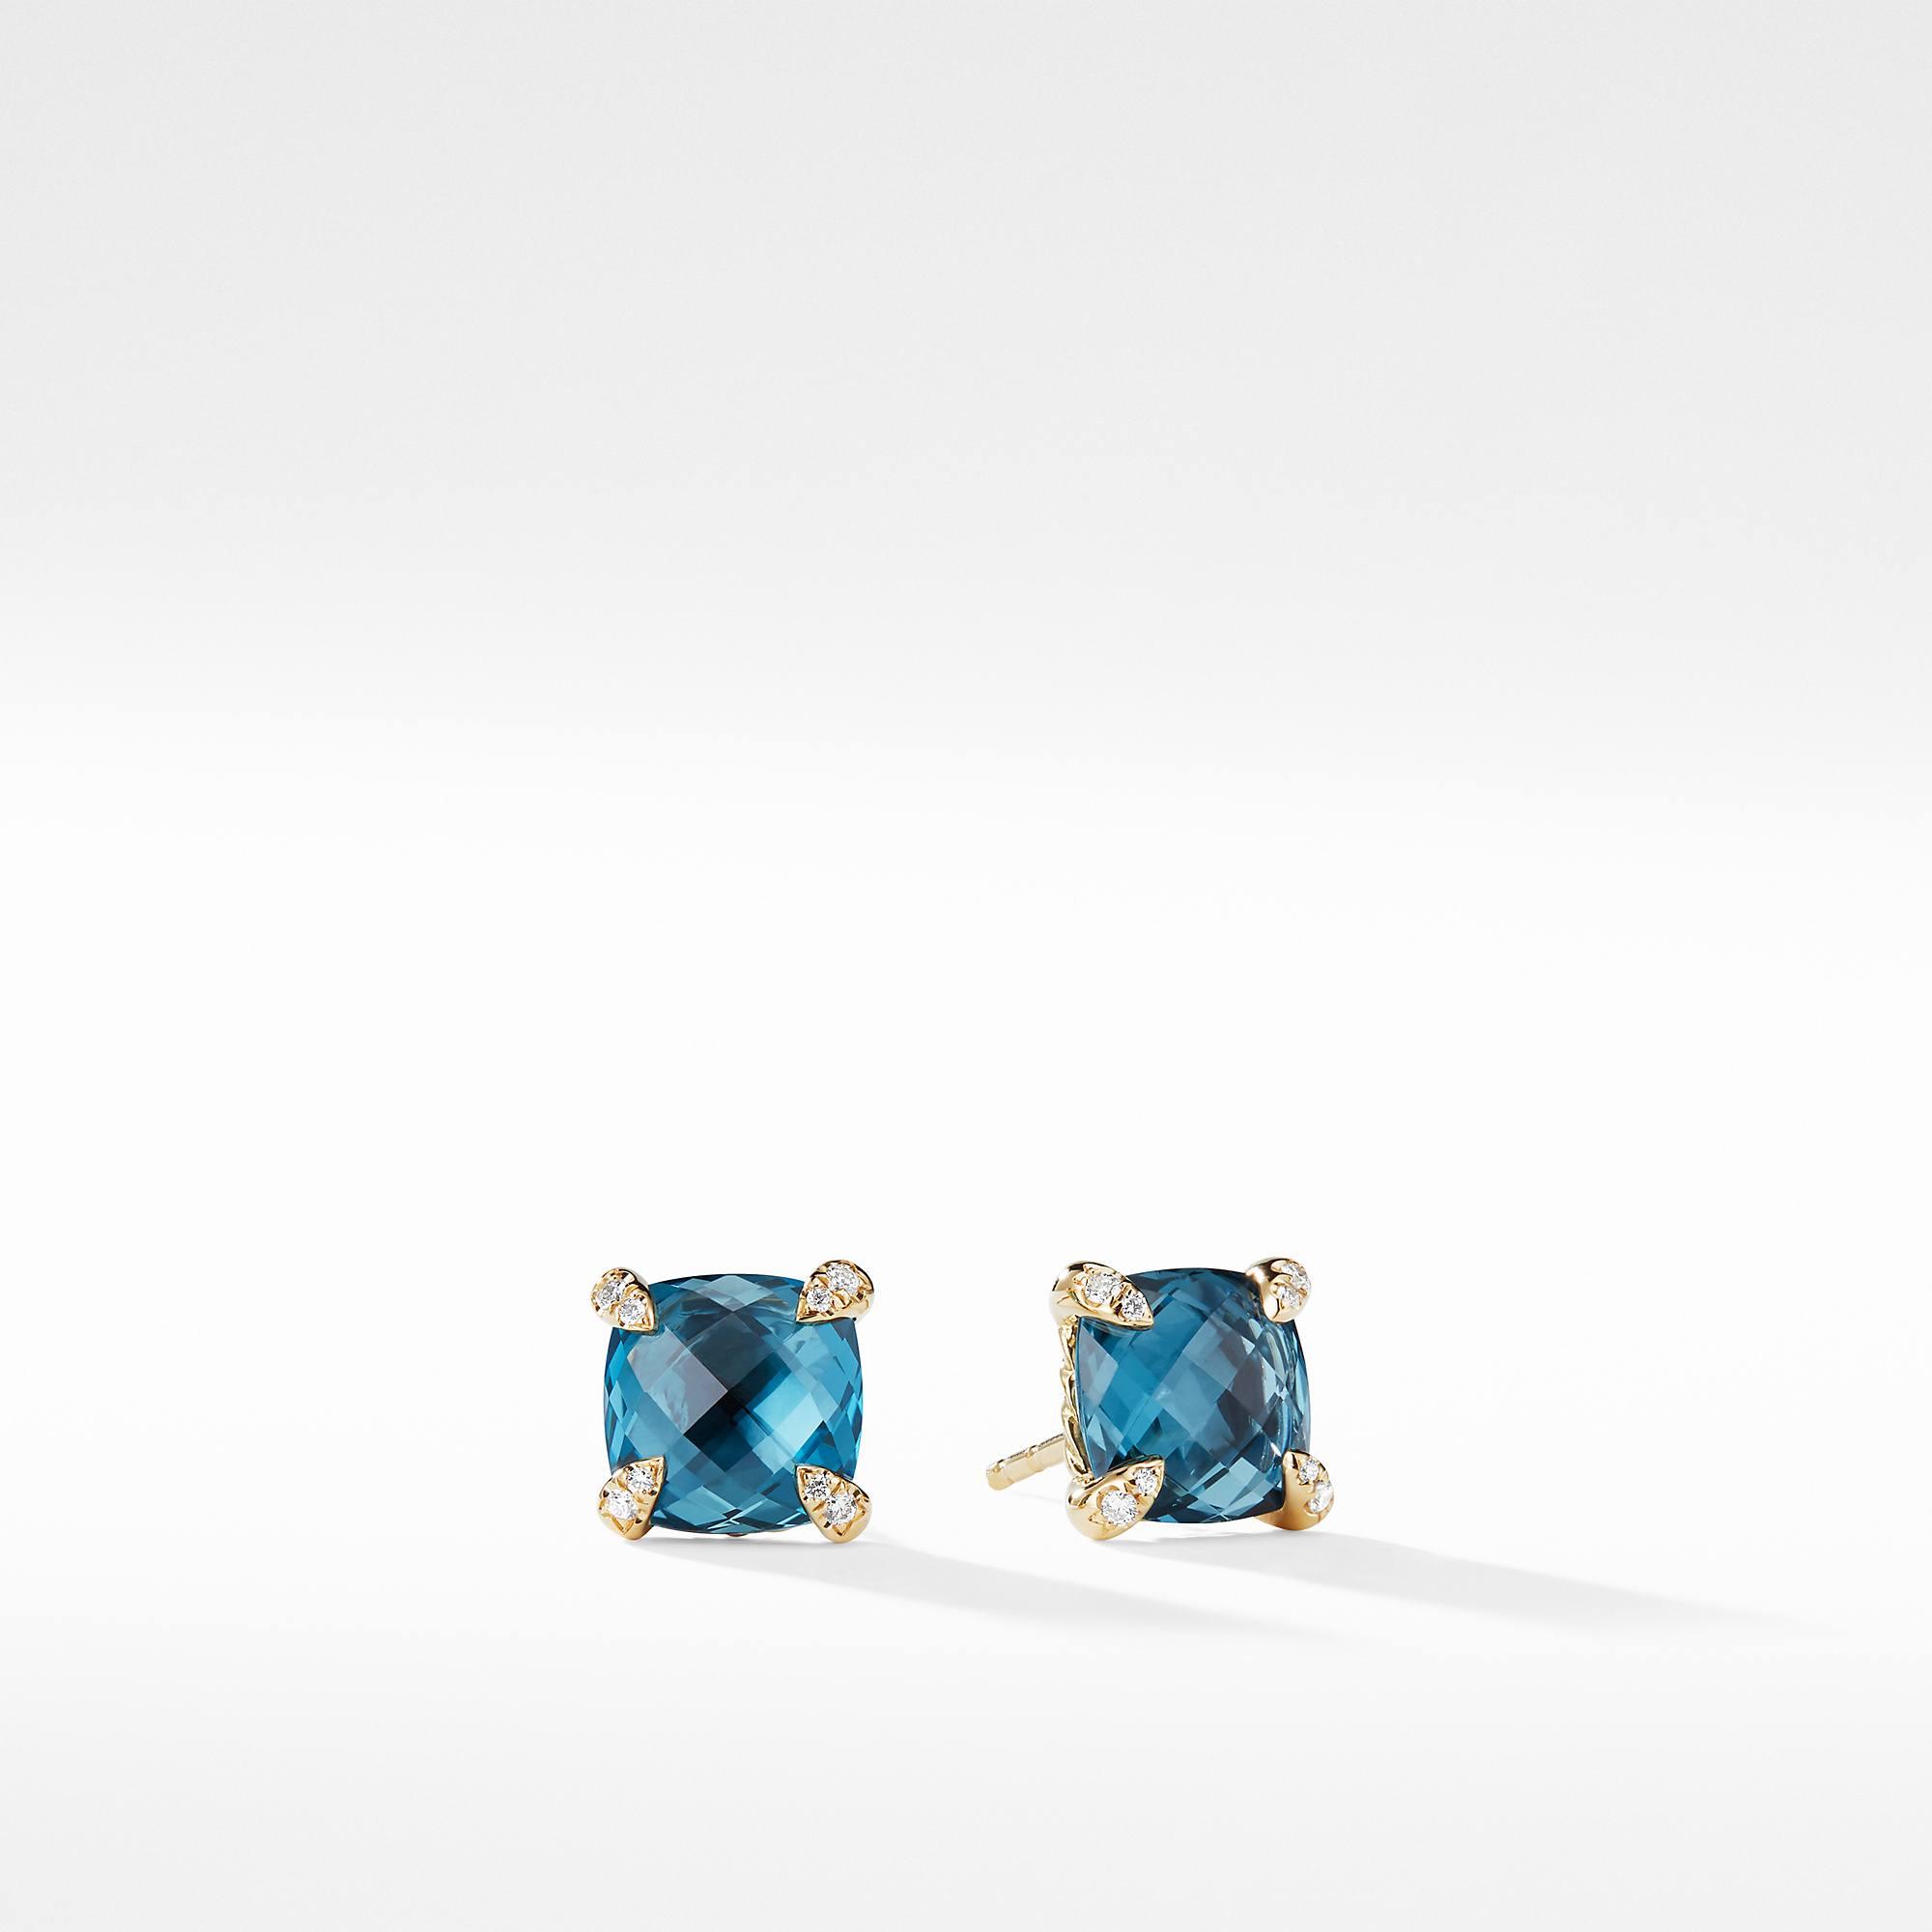 David Yurman Chatelaine Earrings with Hampton Blue Topaz in 18k Gold